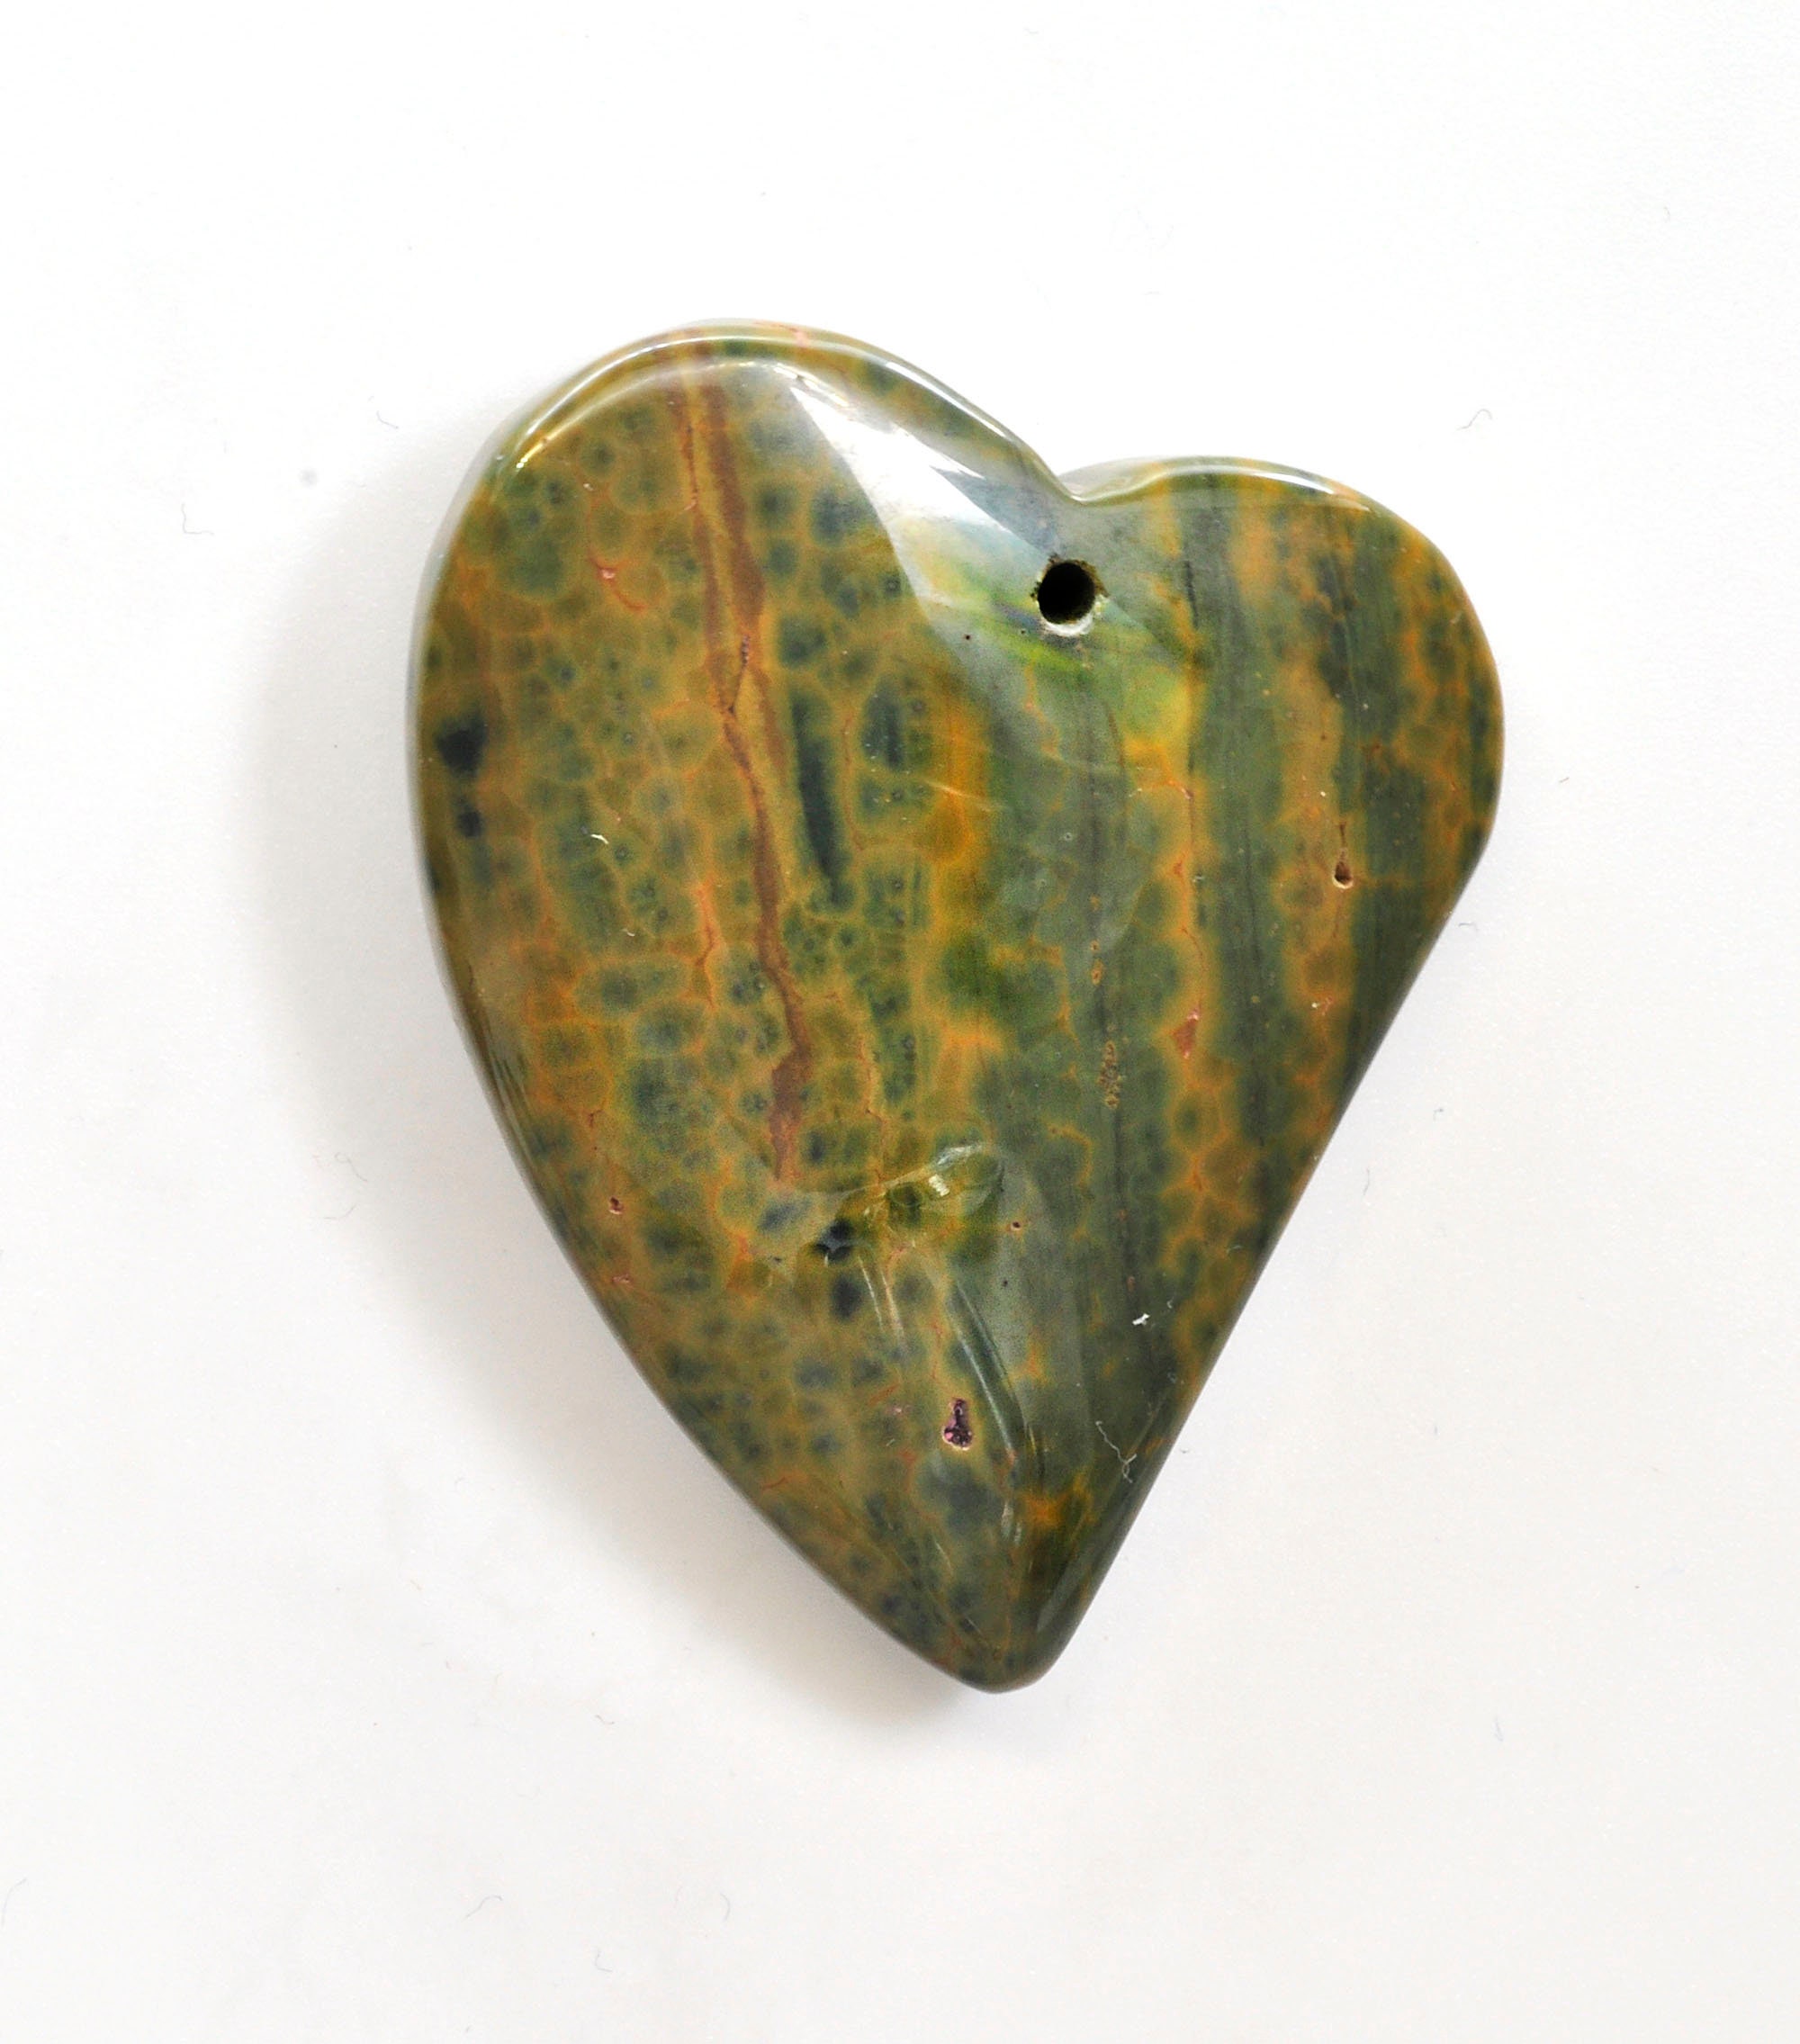 Heart shaped Ocean jasper pendant stone 34x40x8mm